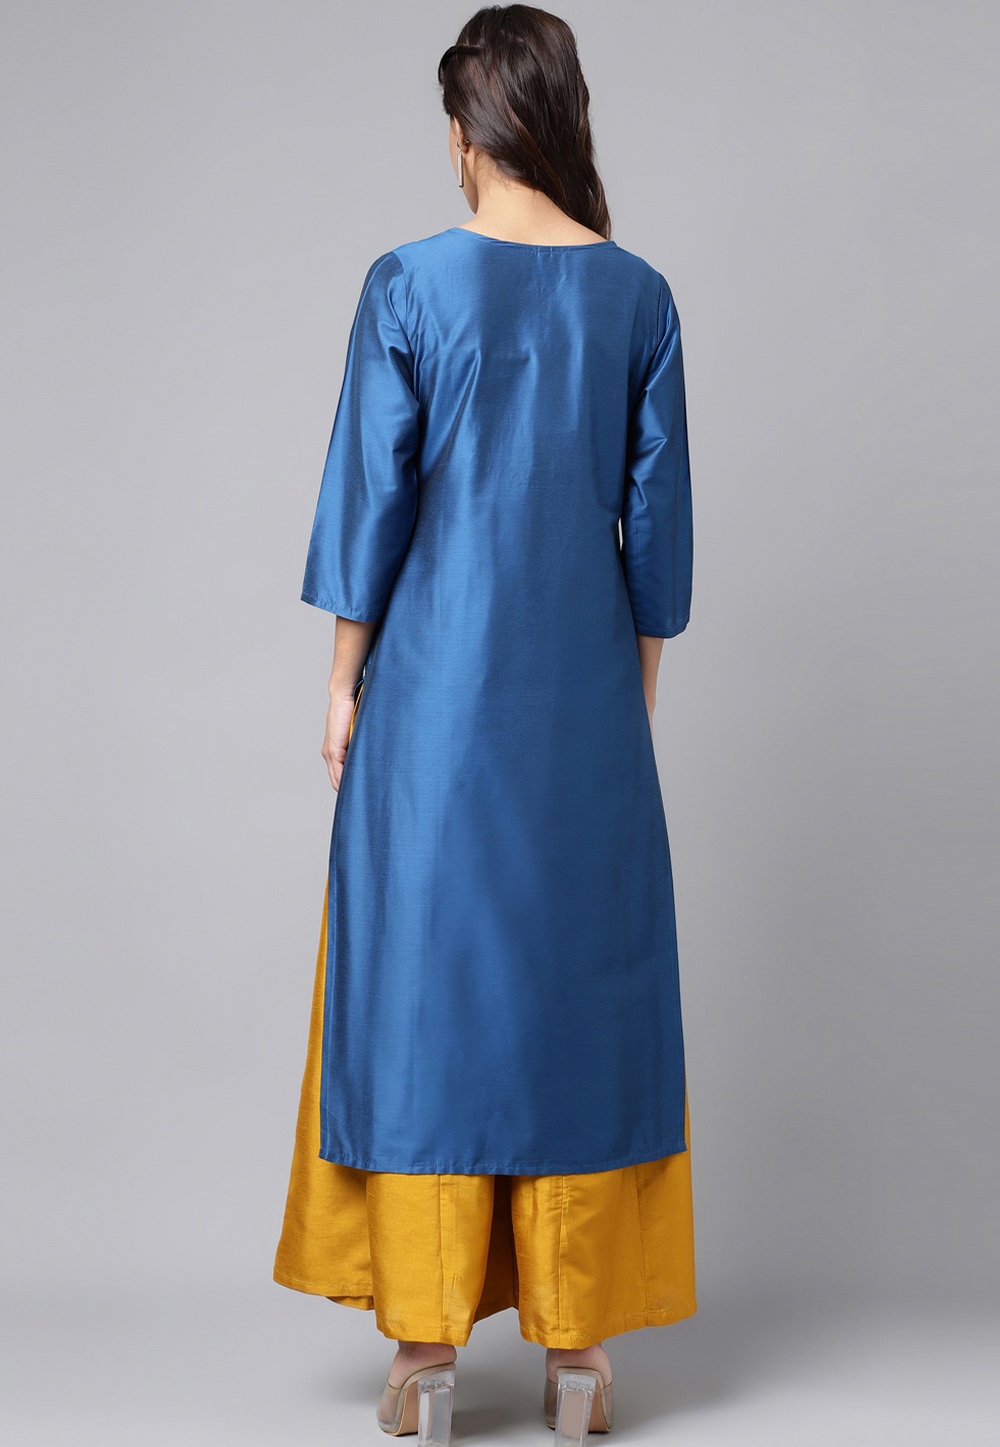 Buy Dark Yellow Printed Godget Dress Online - W for Woman